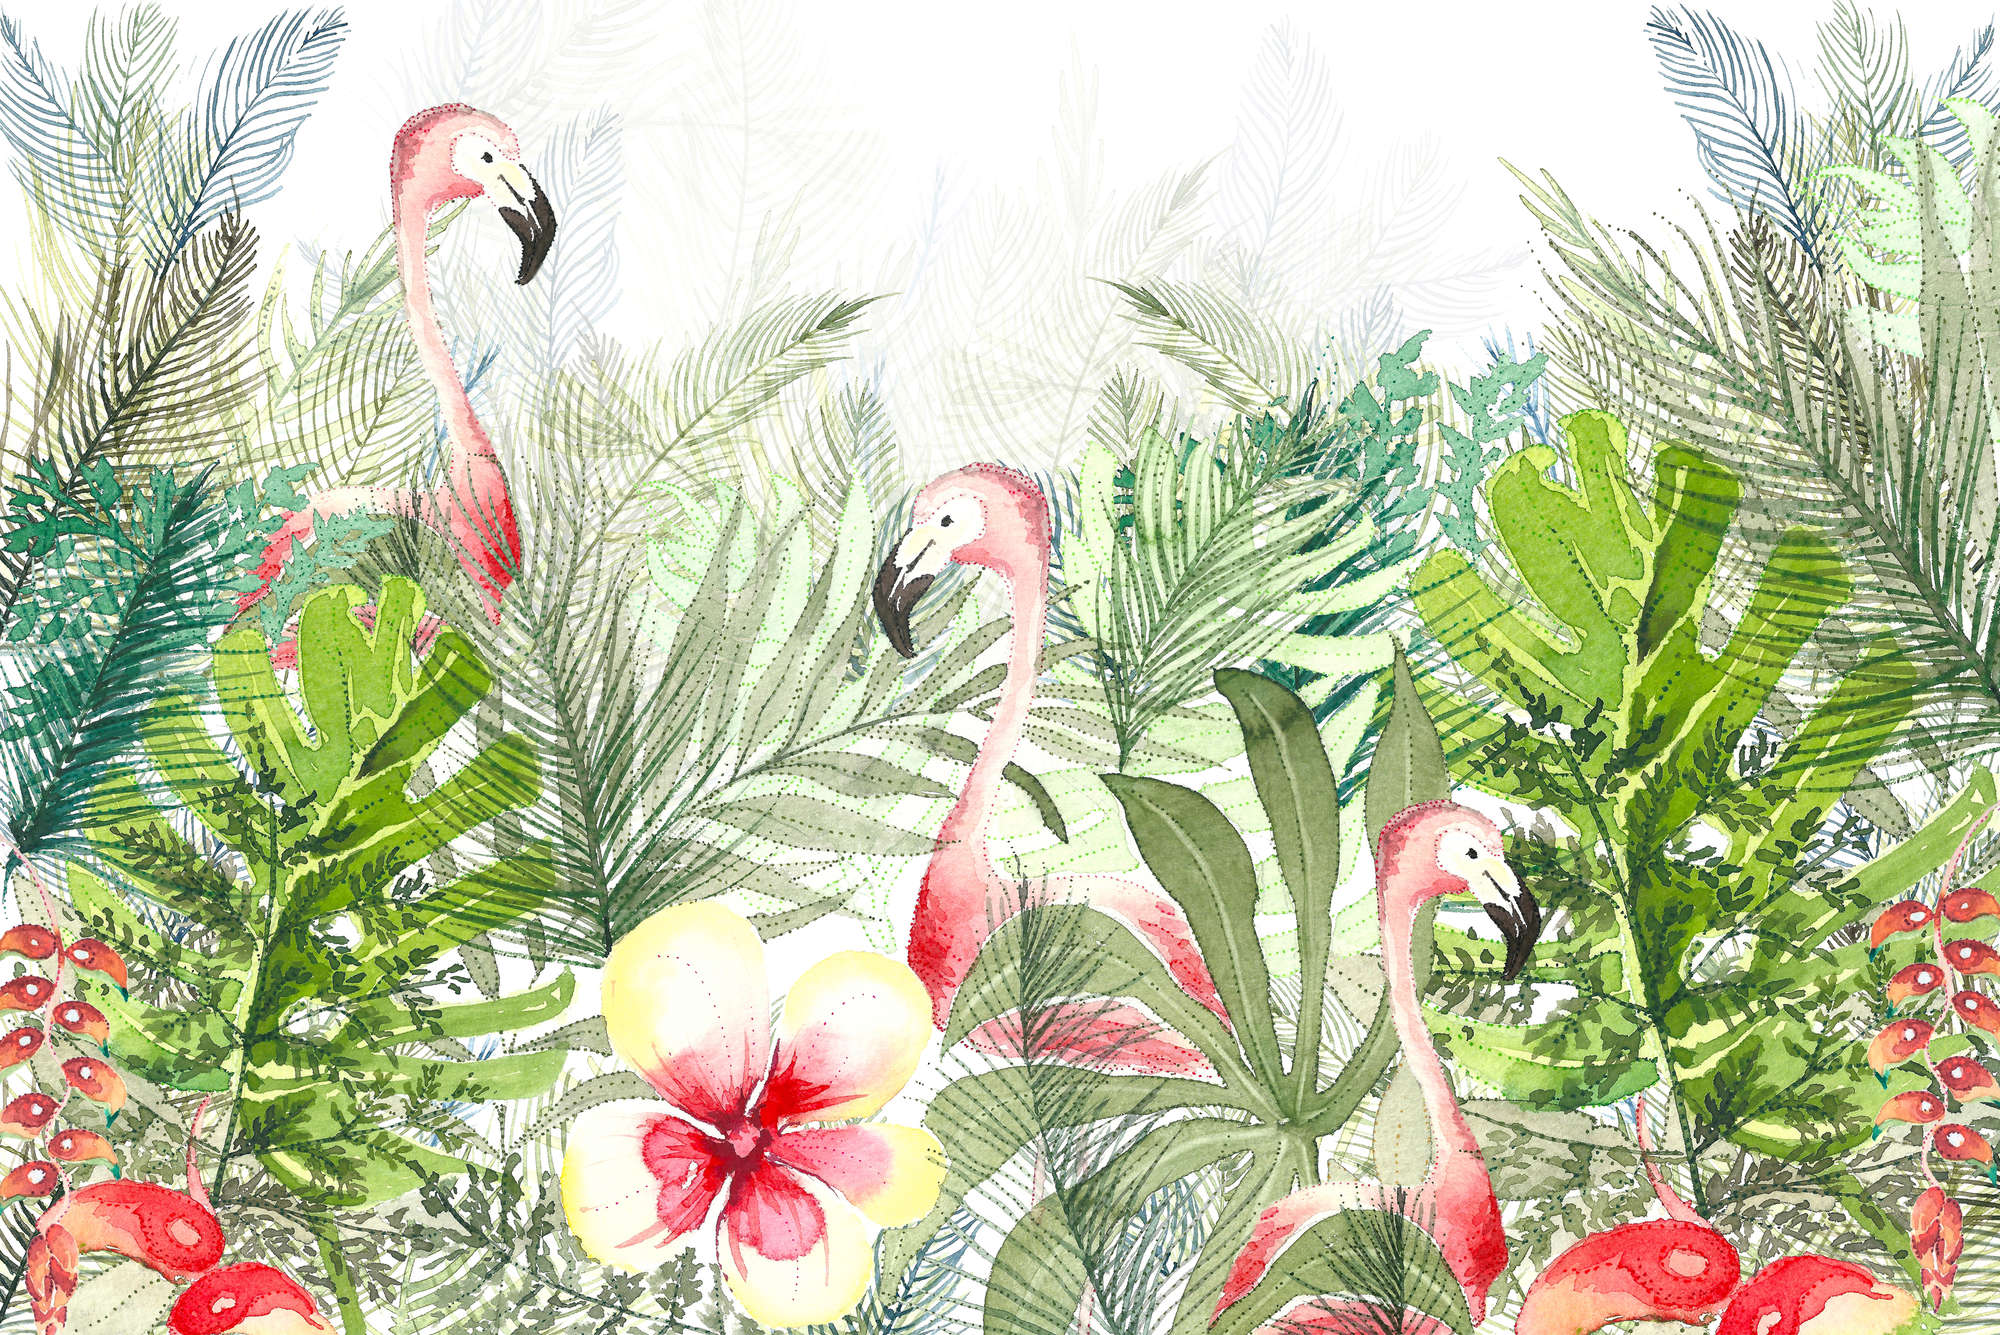             Watercolour mural flamingo, leaves & flowers on premium smooth fleece
        